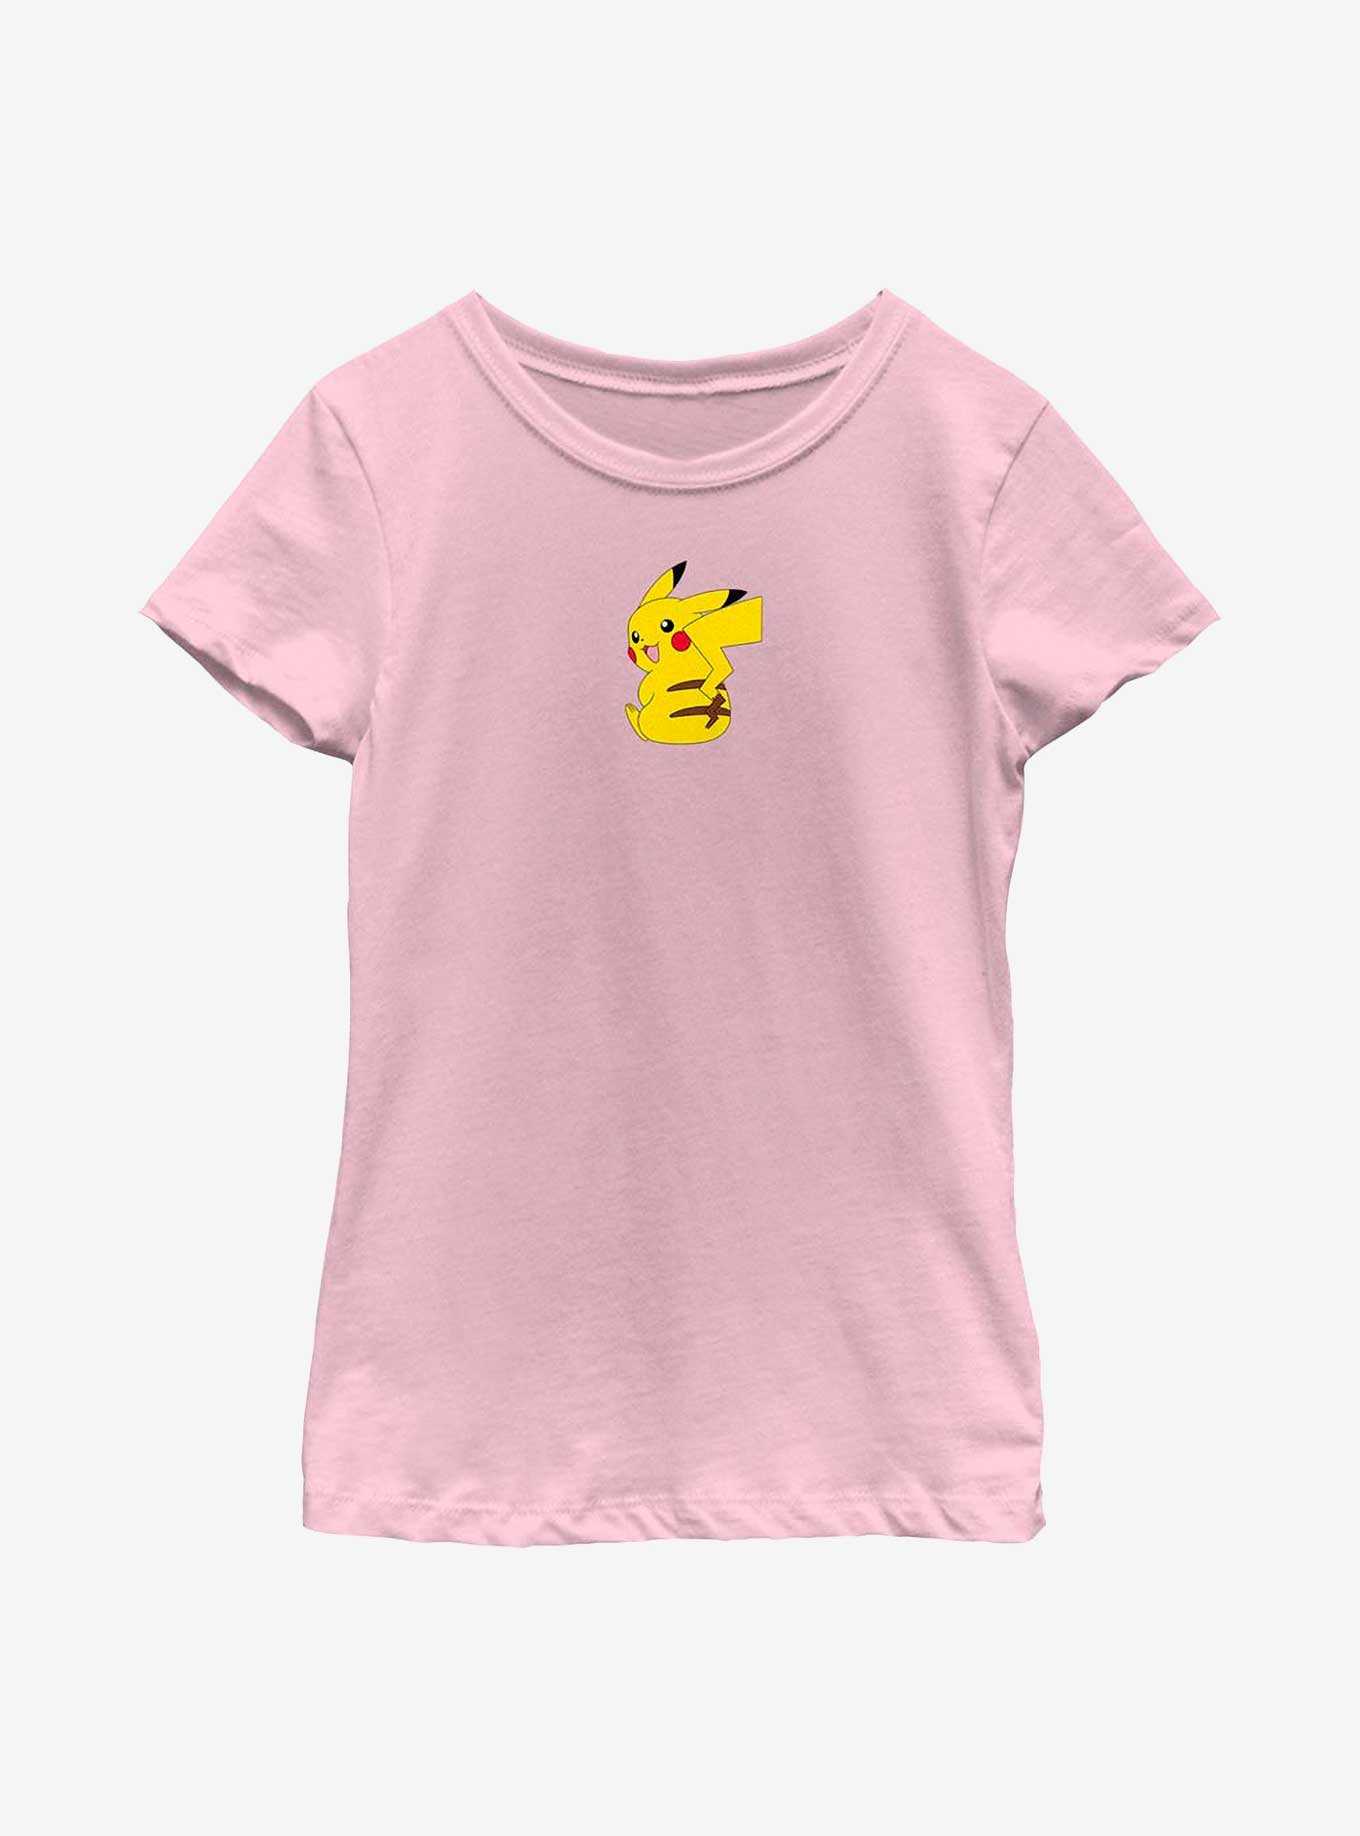 Pokemon Small Pikachu Stripes Youth Girls T-Shirt, , hi-res